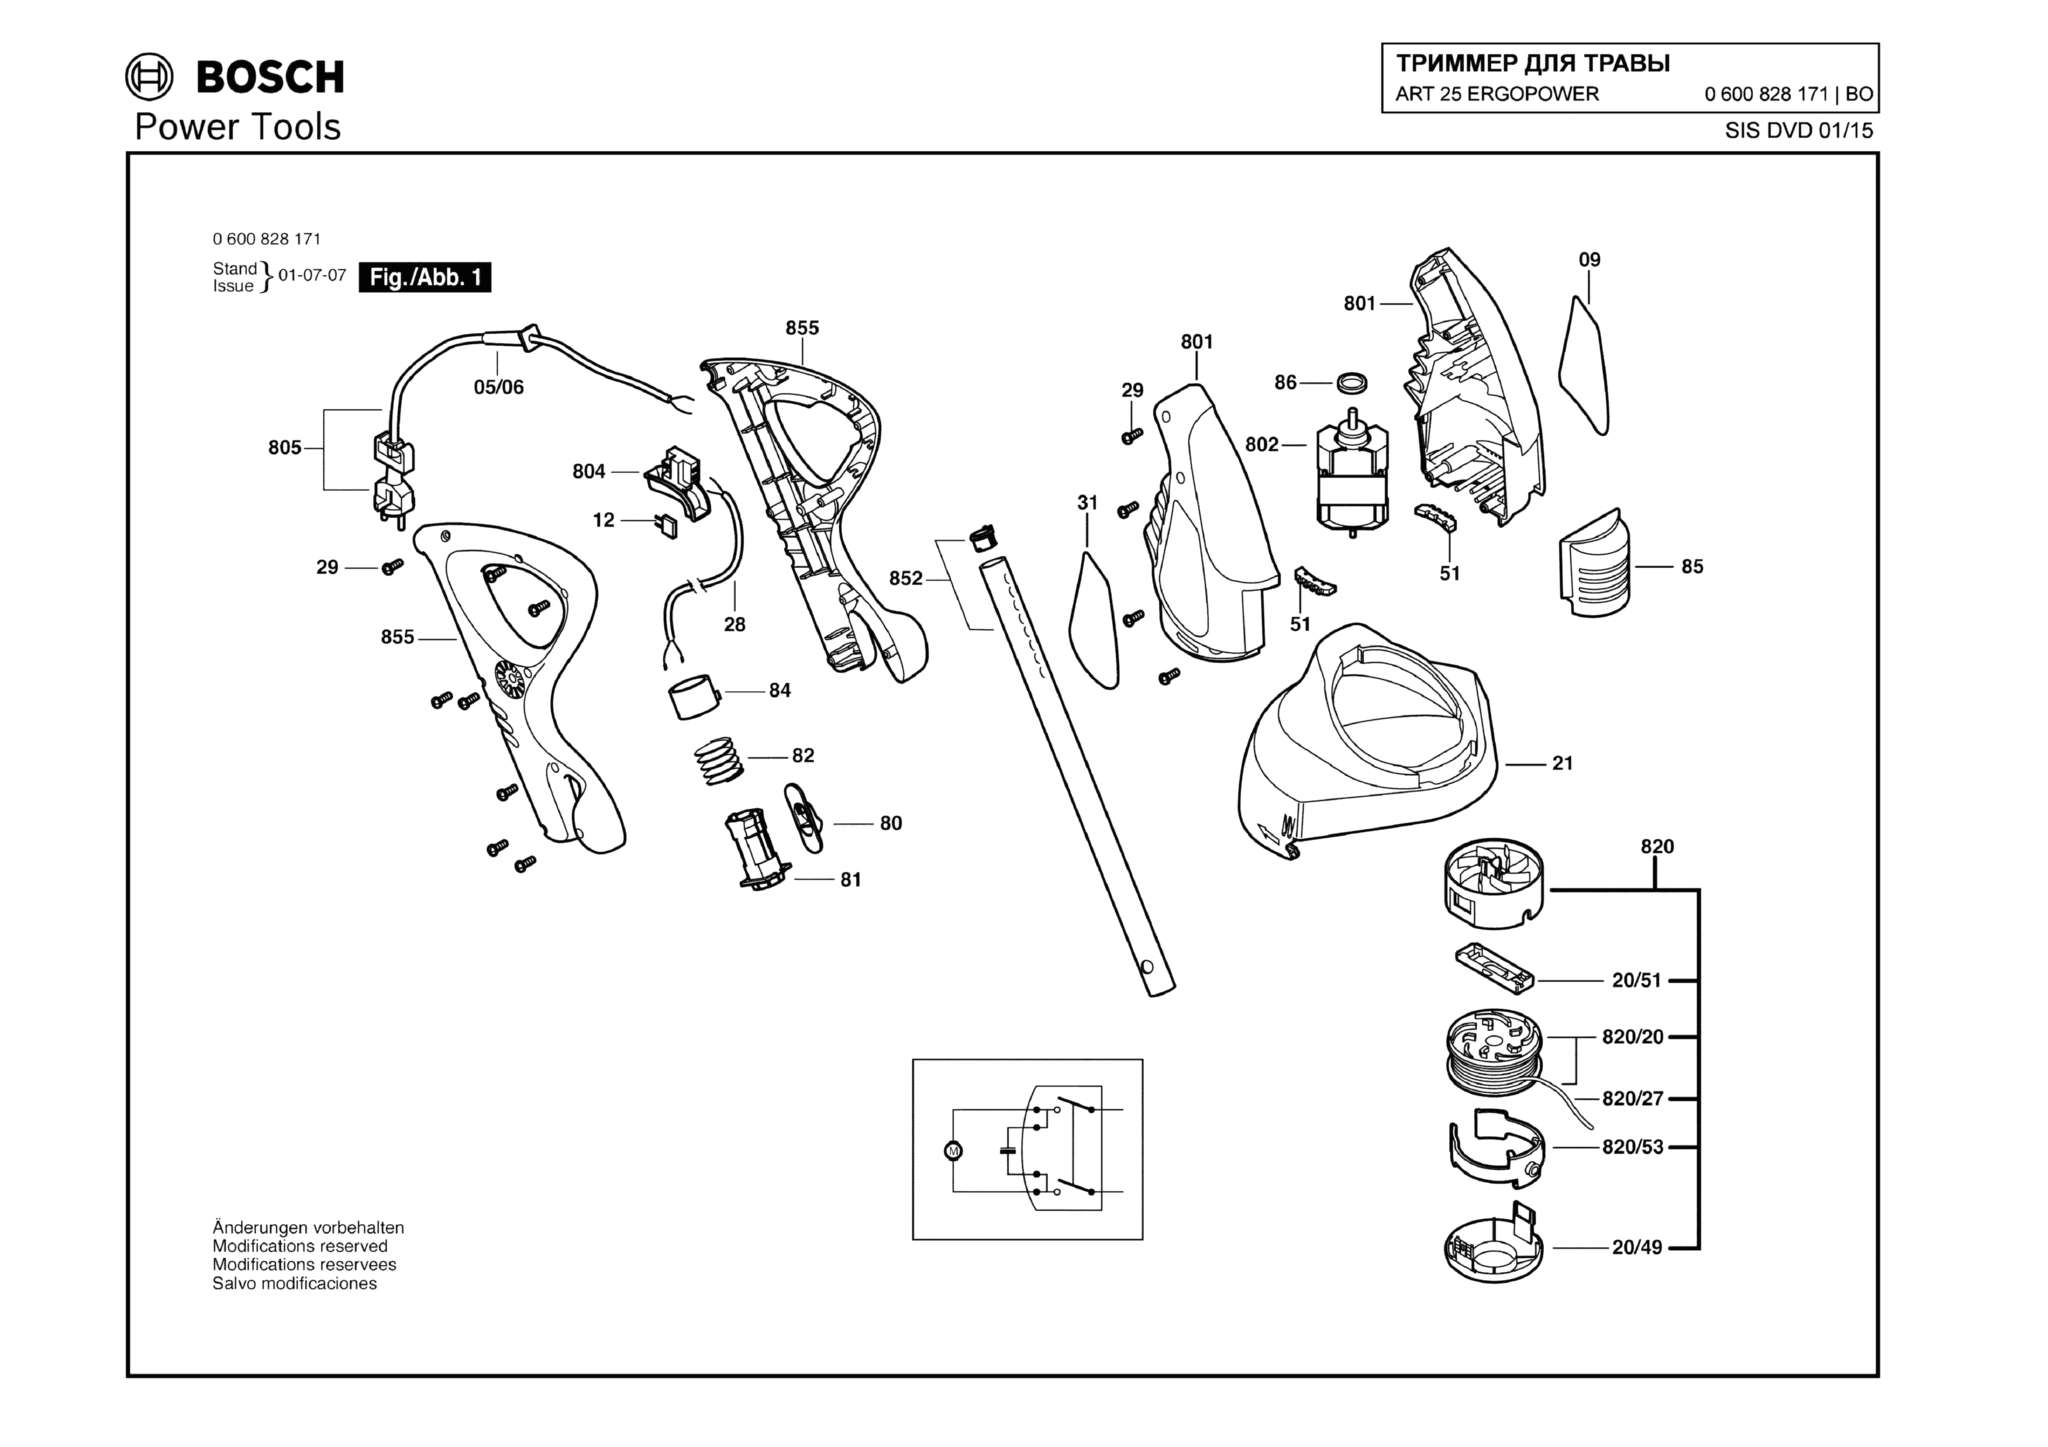 Запчасти, схема и деталировка Bosch ART 25 ERGOPOWER (ТИП 0600828171)